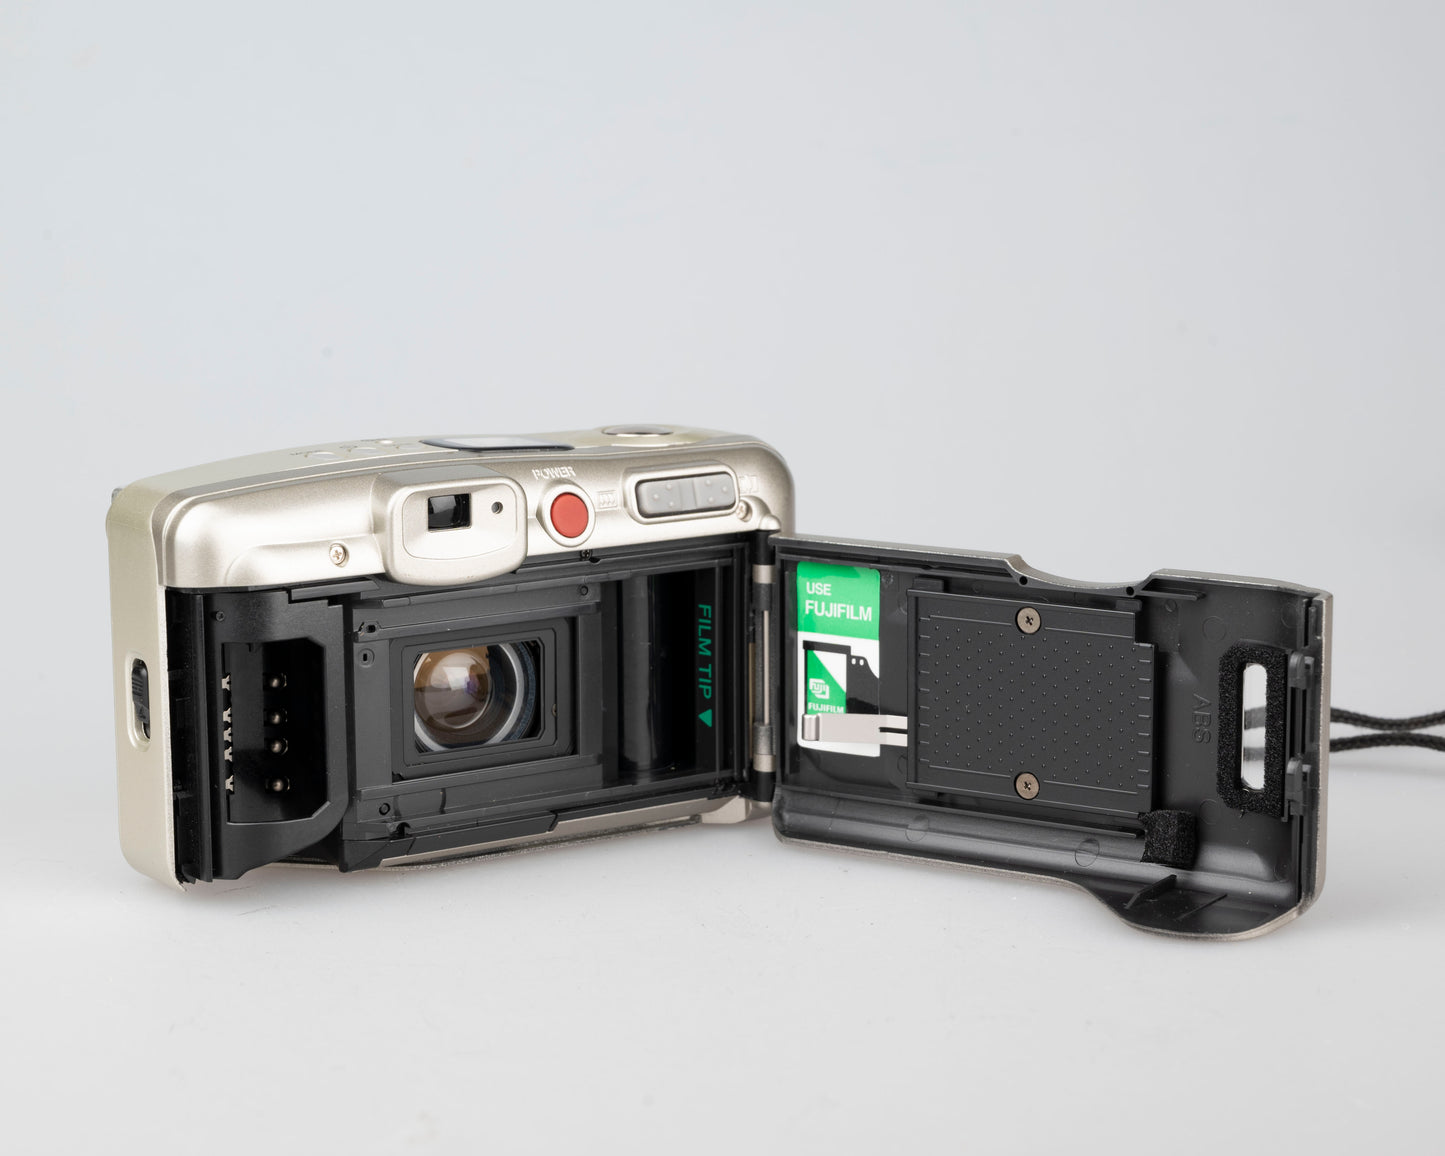 Fujifilm Discovery S1450 Zoom Date w/ original box (serial 10084579)